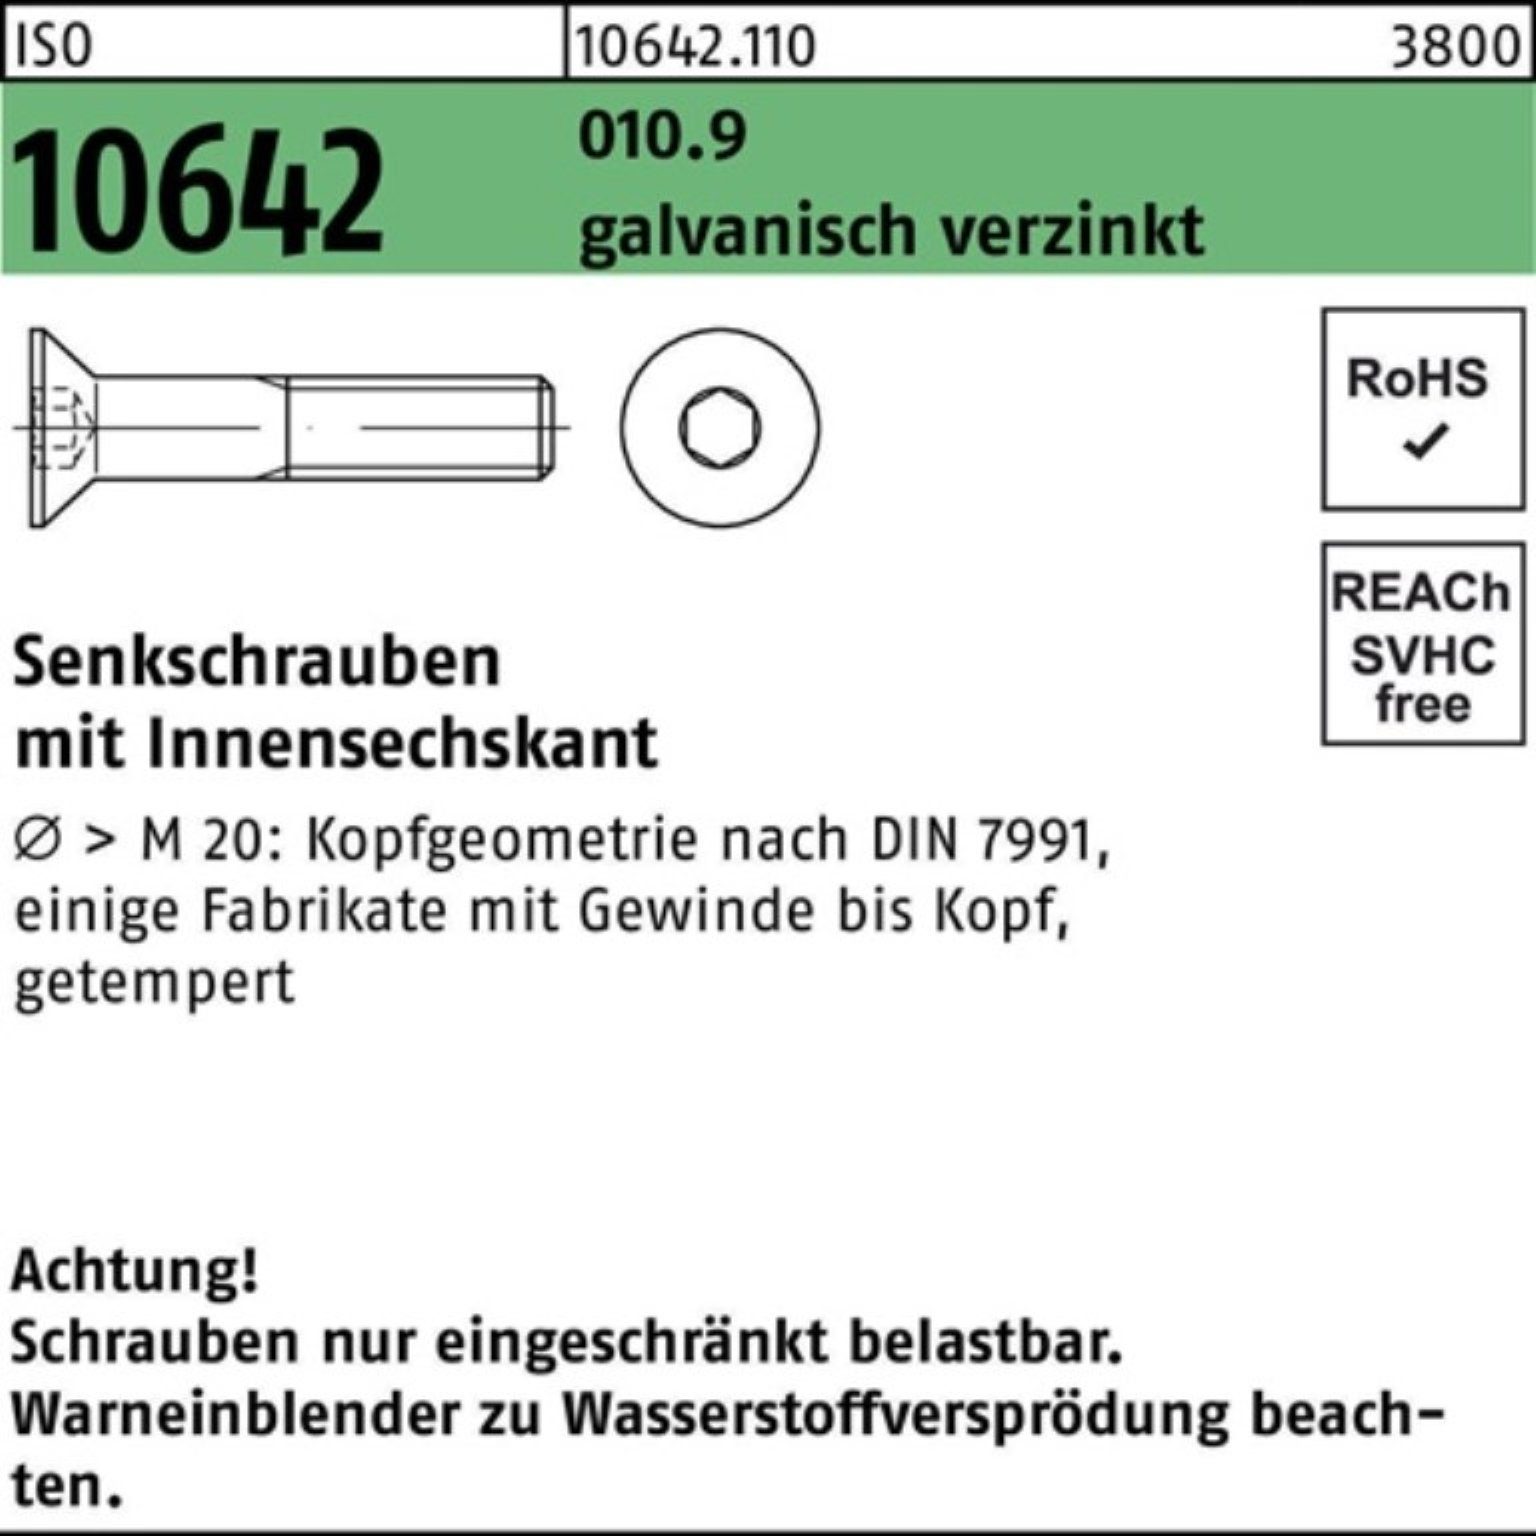 Reyher Senkschraube 200er Pack Senkschraube ISO 10642 Innen-6kt M5x 35 010.9 galv.verz. 20